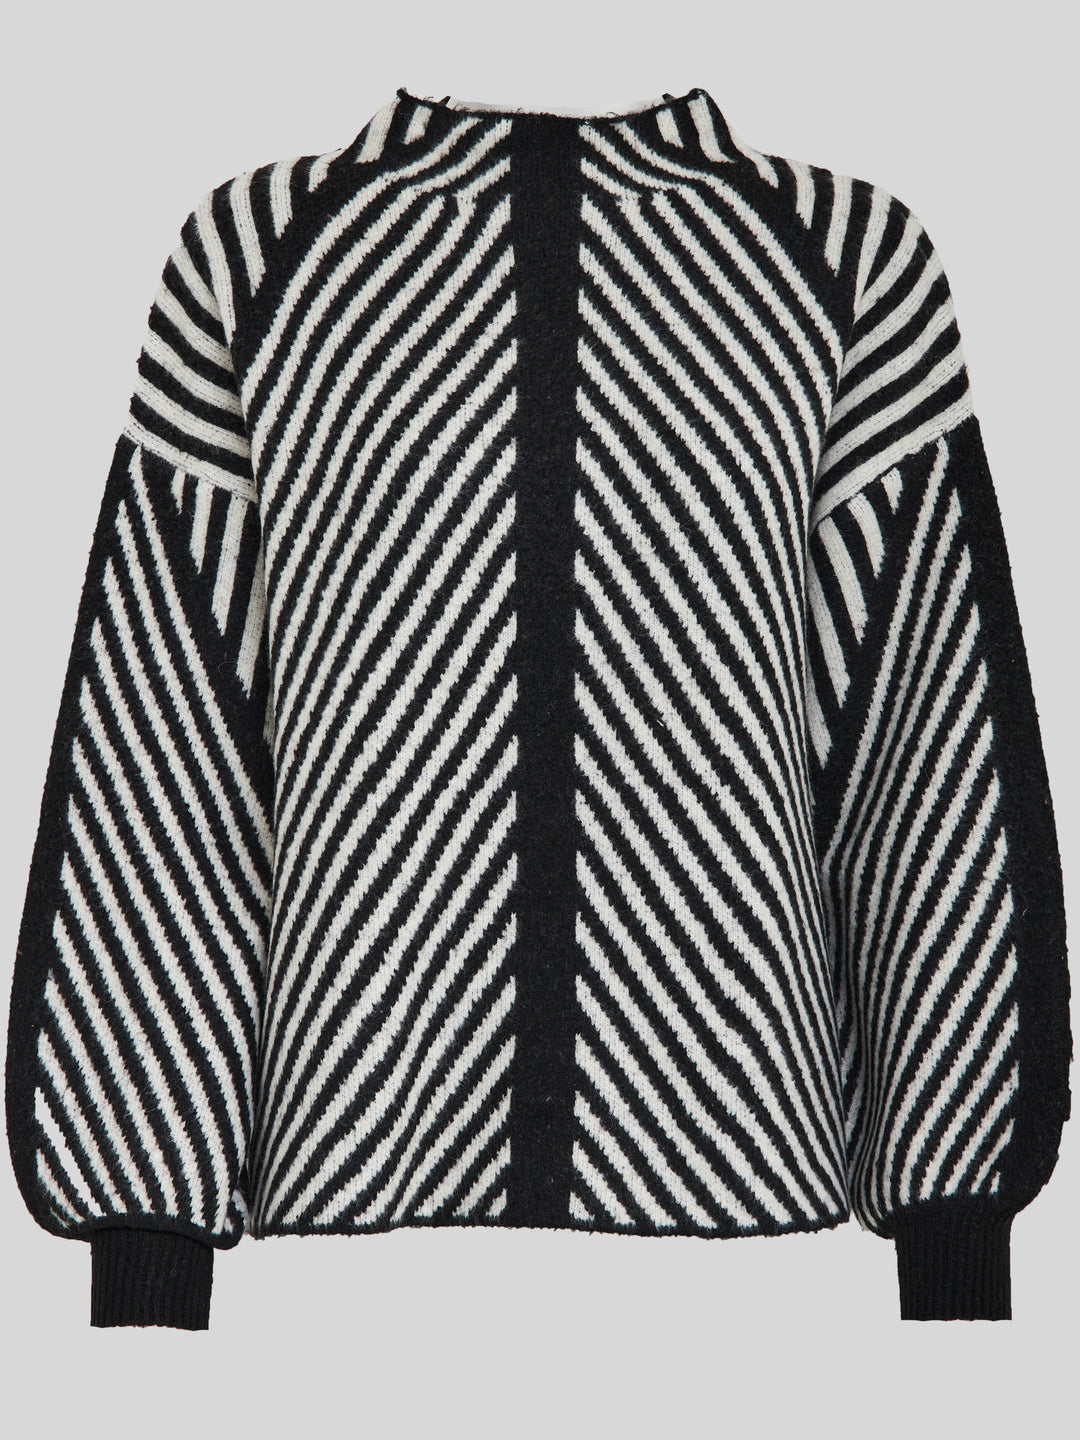 zwart-witte jacquard trui